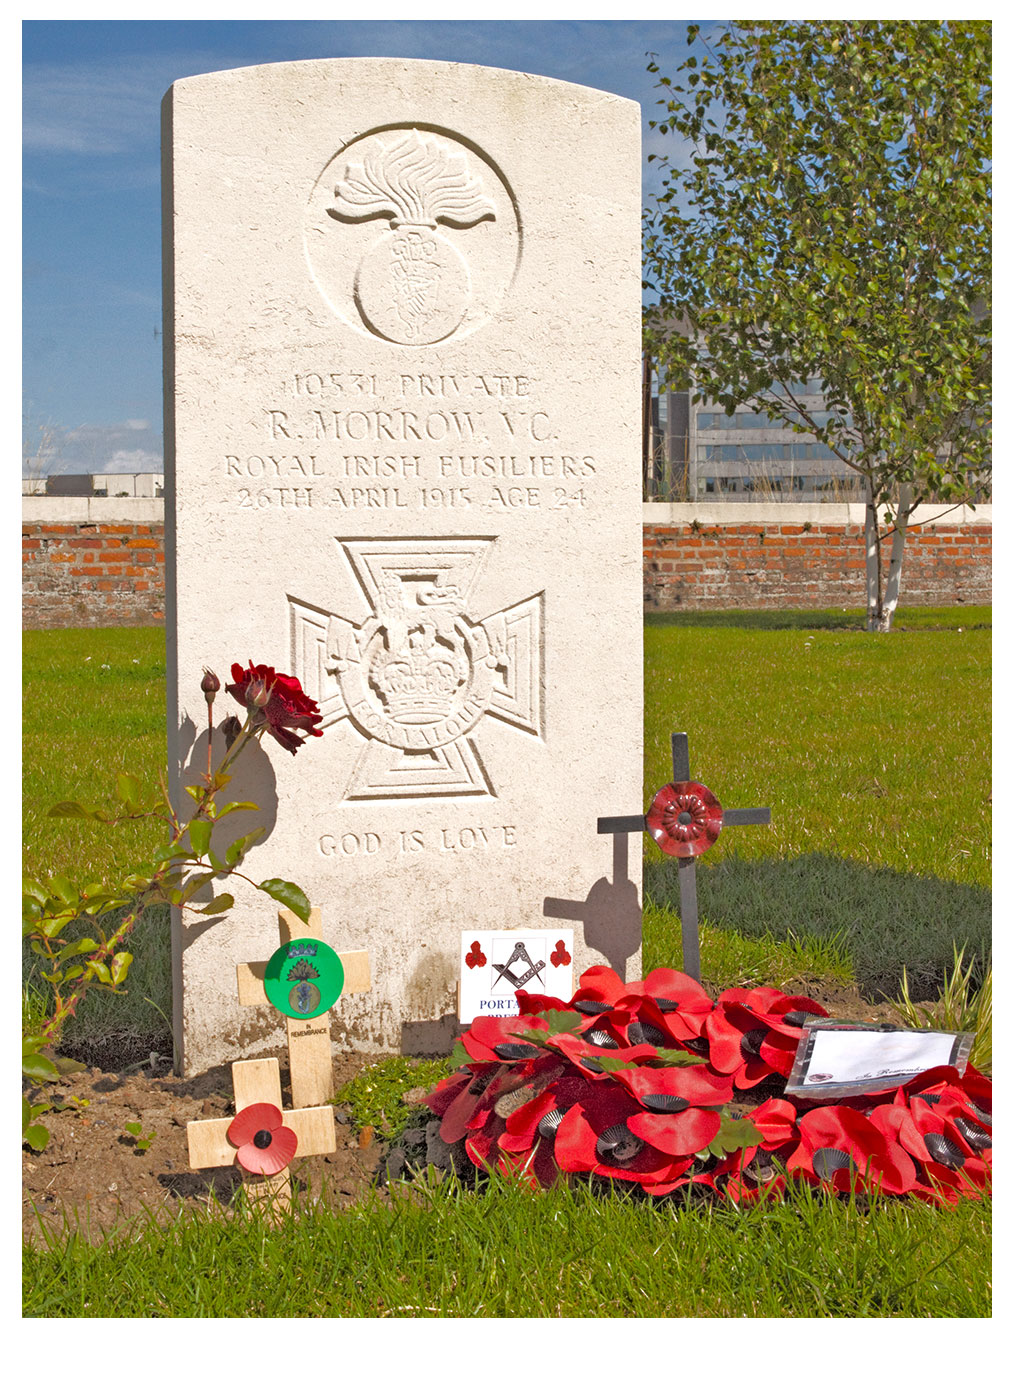 Private Robert Morrow V.C's grave